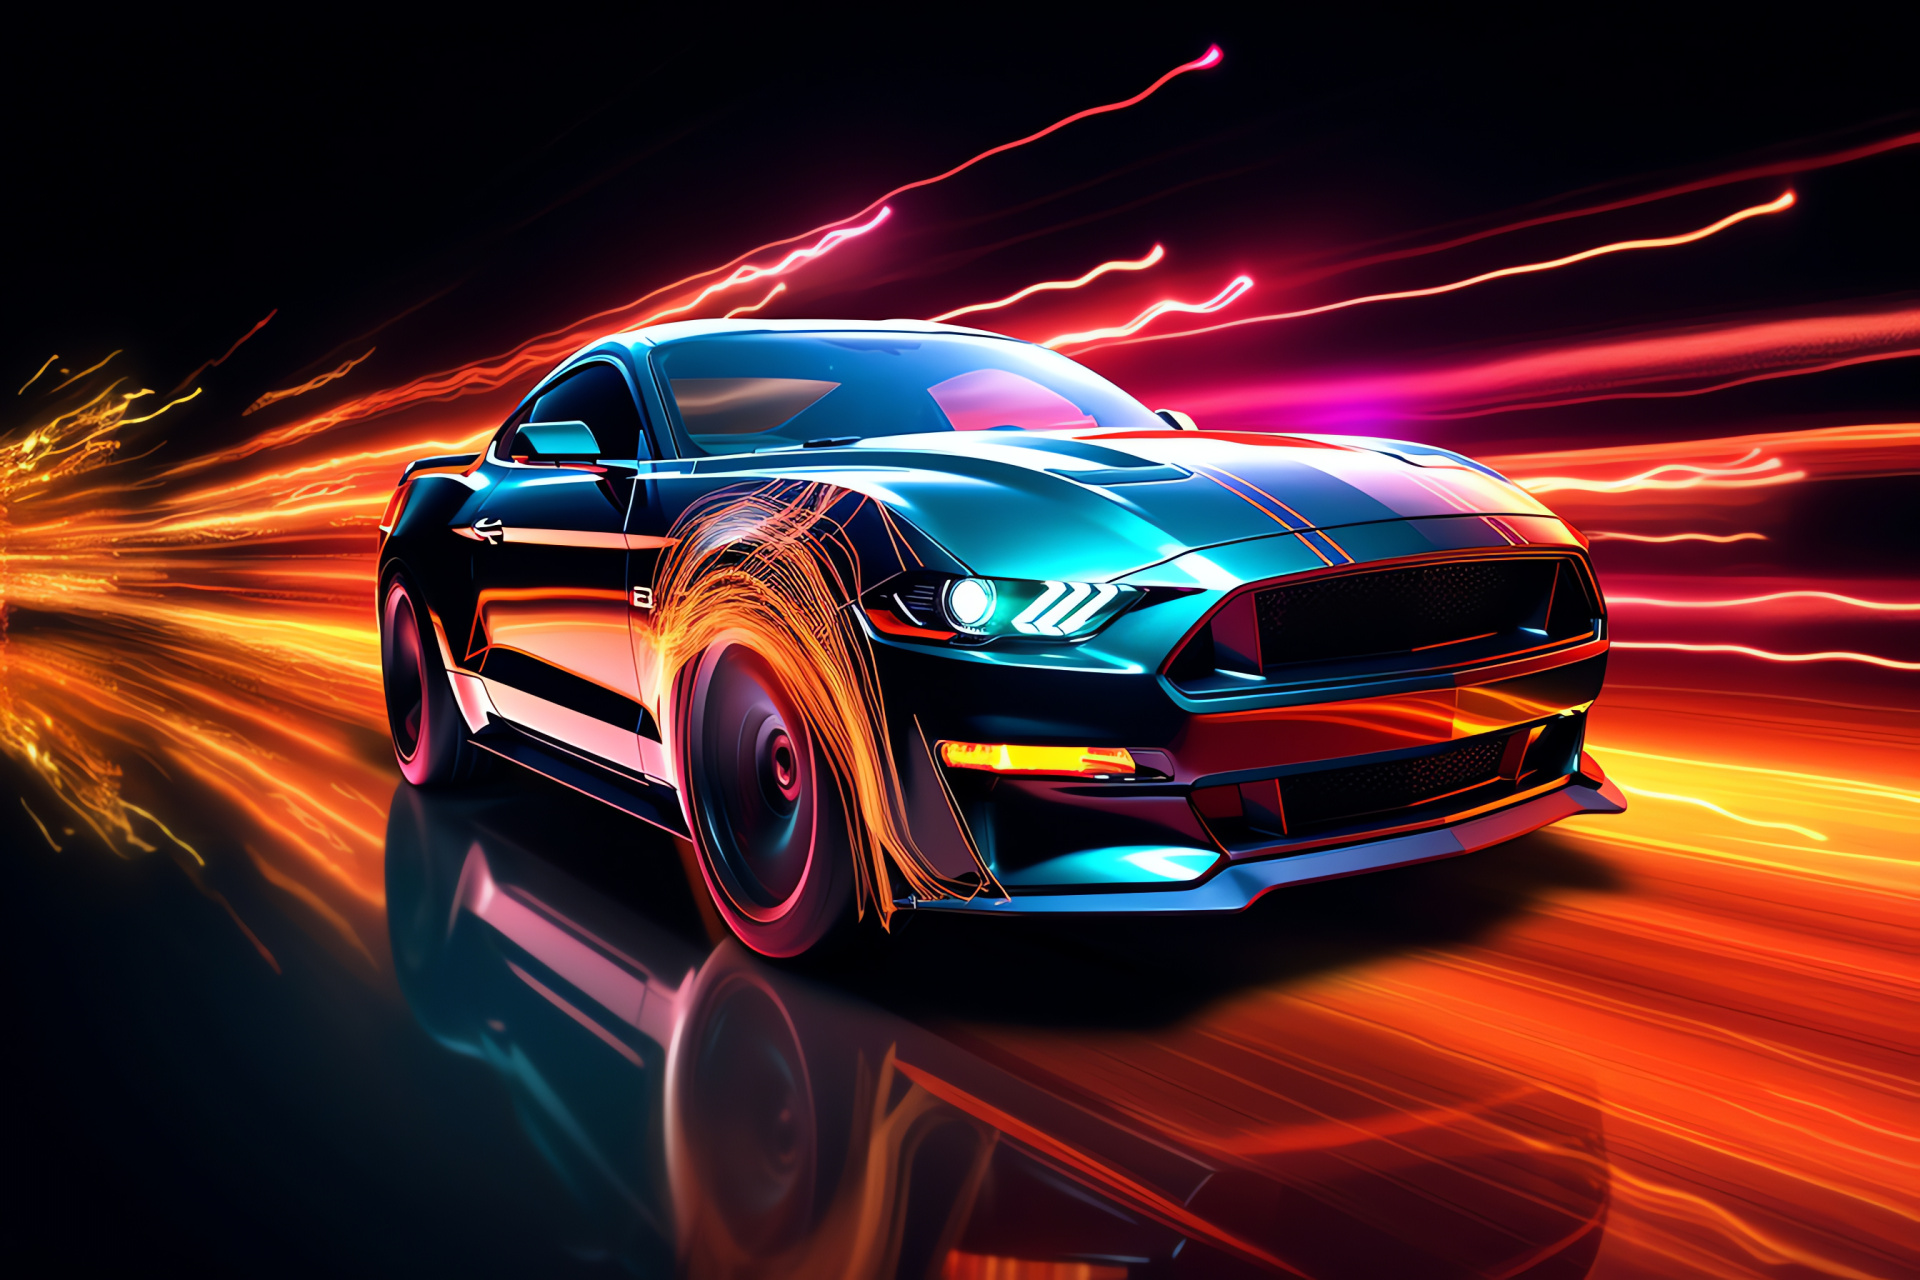 Mustang ambiance, Neon contour lighting, Expansive view, Colorful light play, Automotive grace, HD Desktop Image